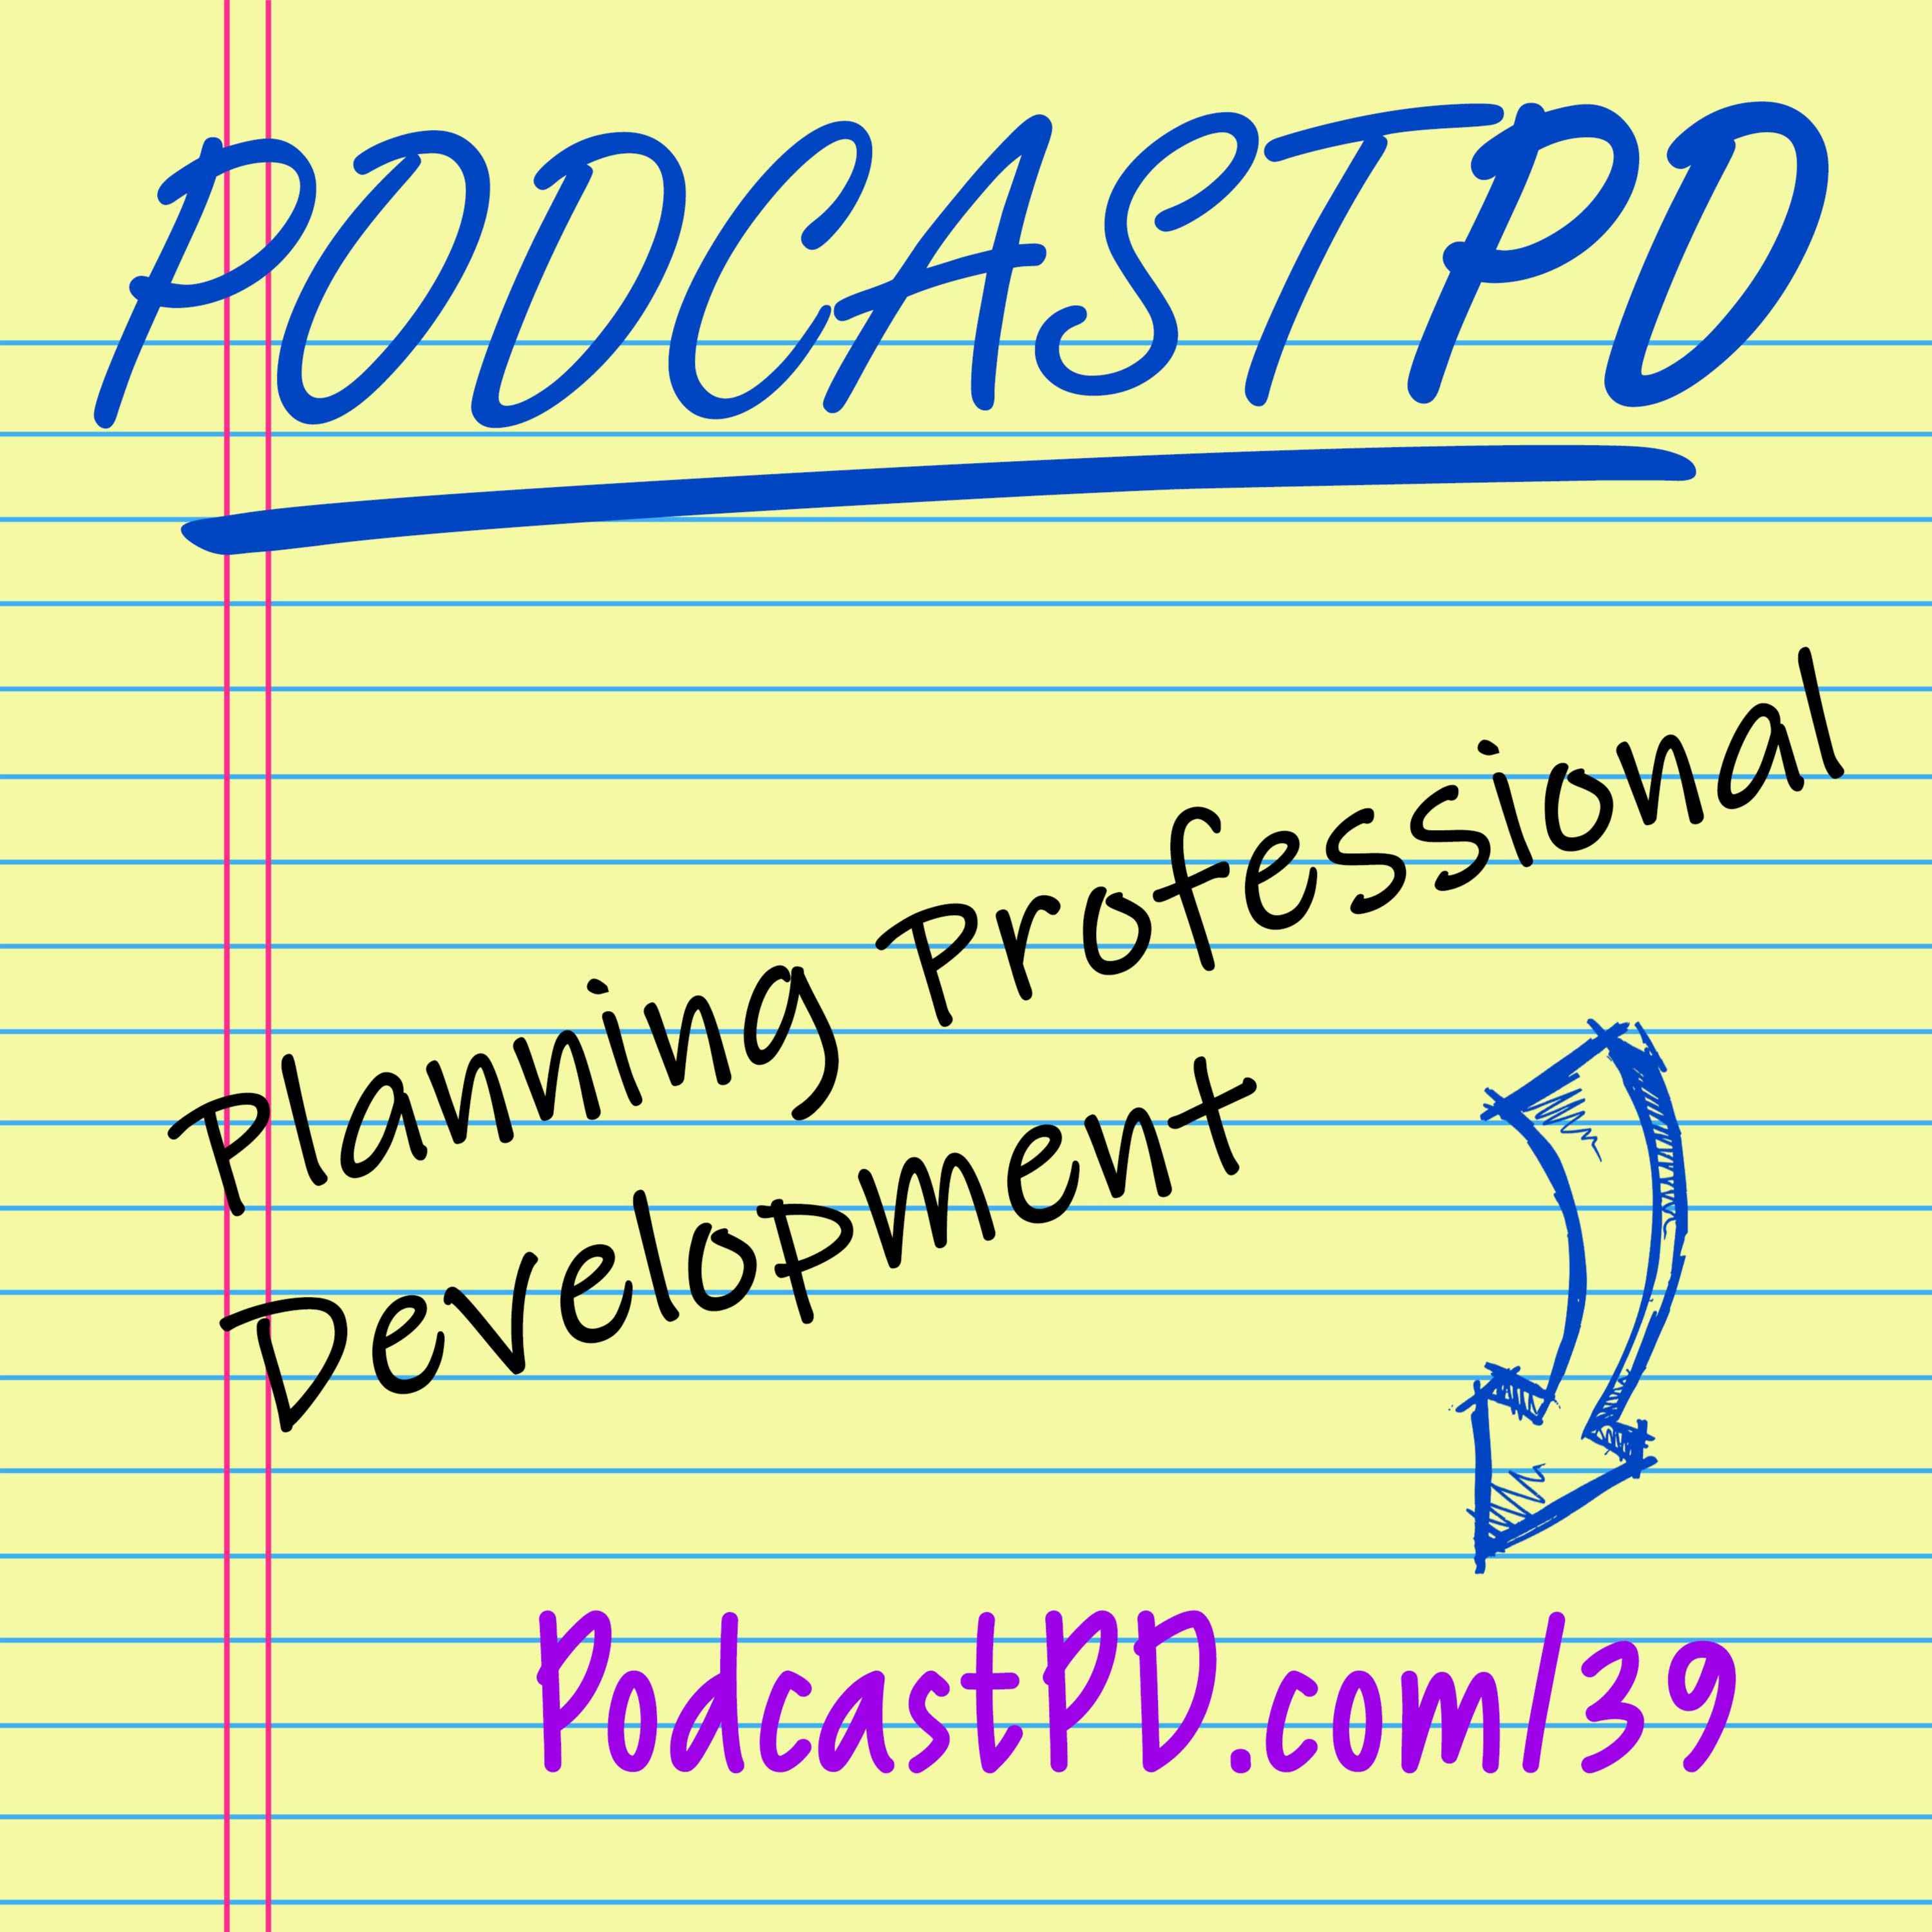 Planning Professional Development - PPD039 Image